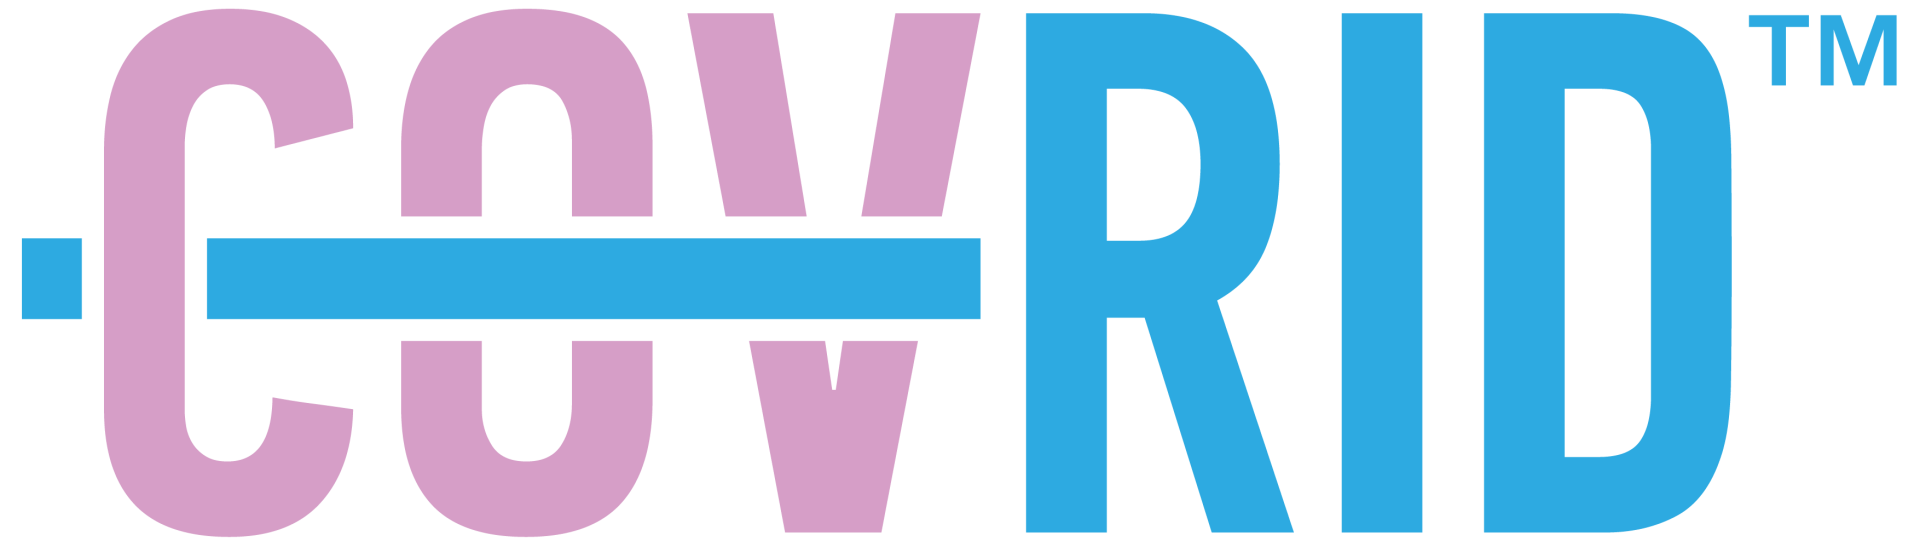 Pink and Blue COV-RID Logo for COV-RID Foaming Hand Sanitiser